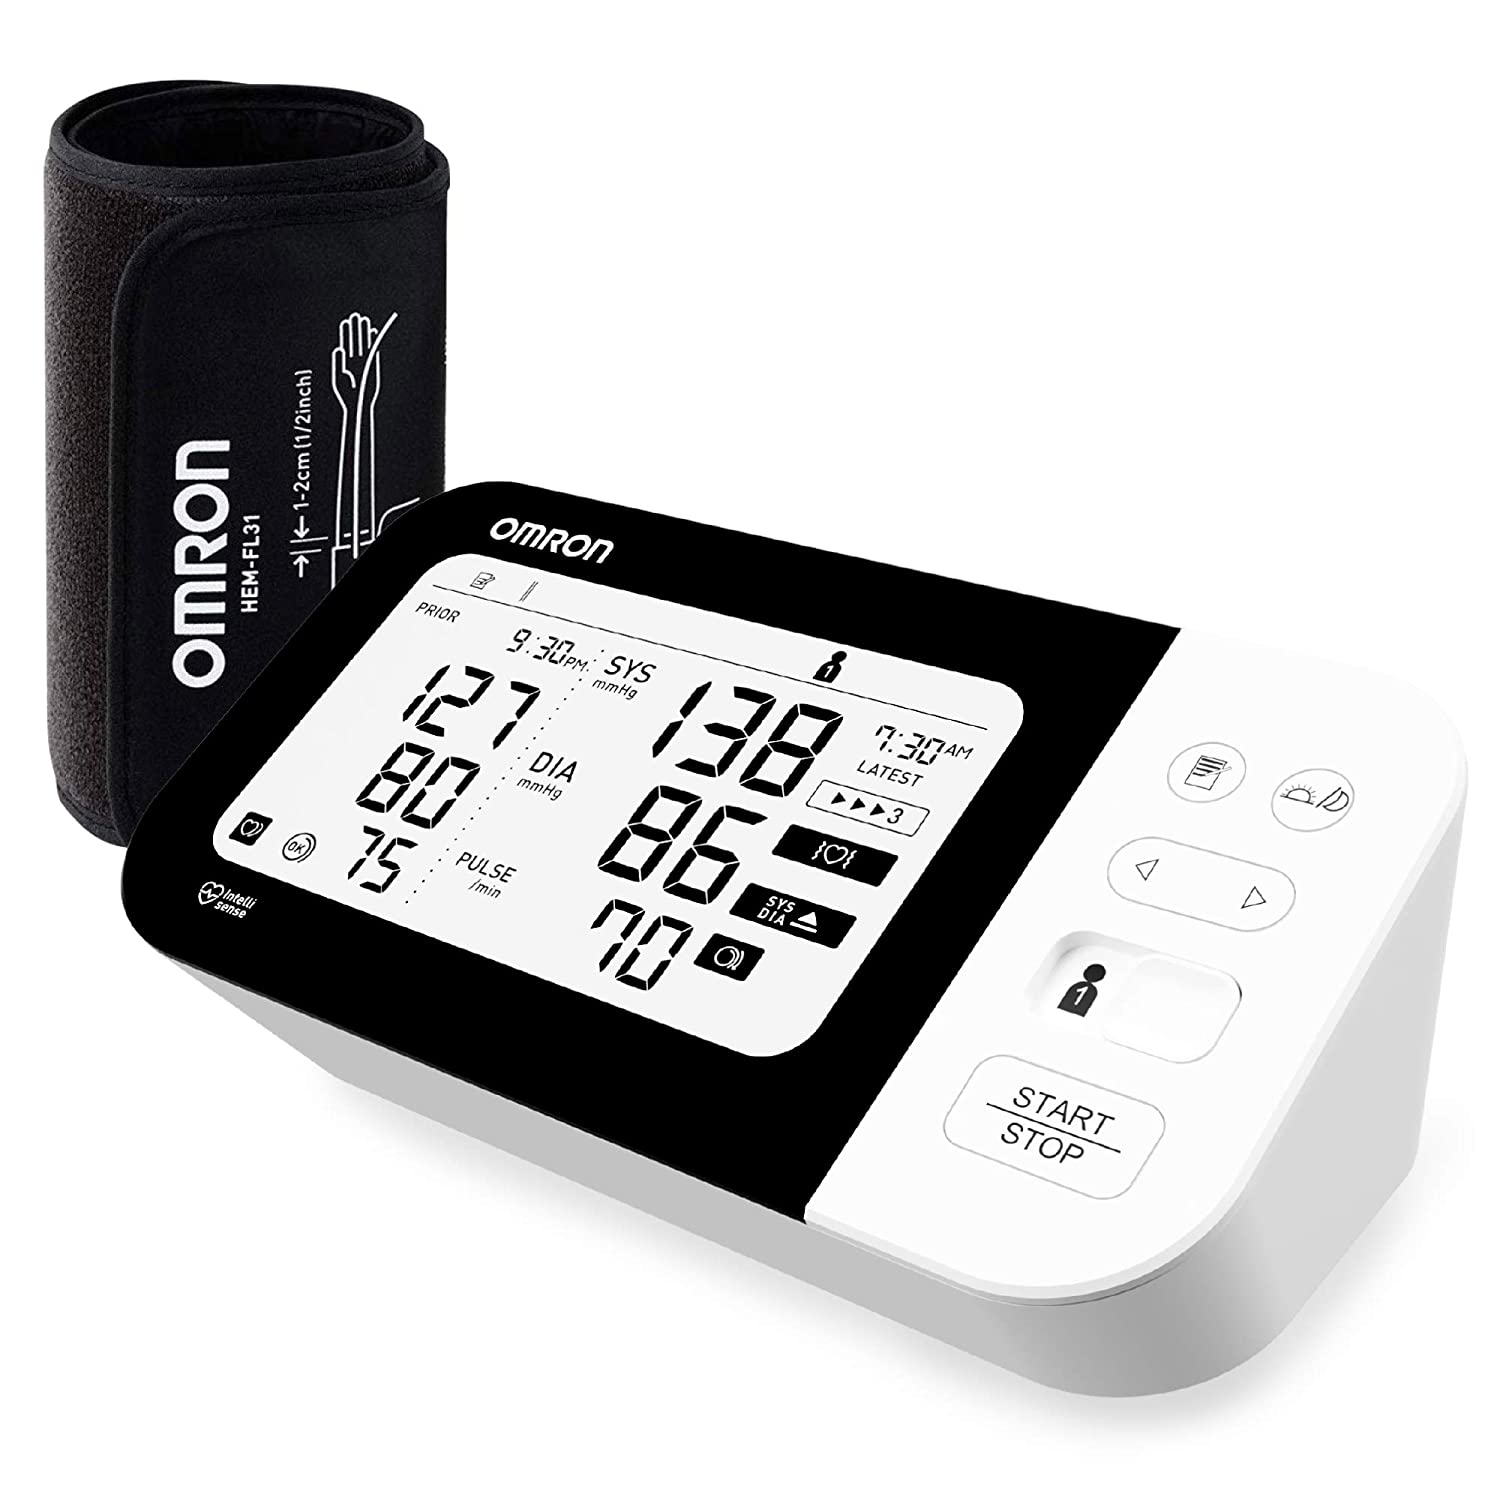 Omron HEM 7361T Blood Pressure Monitor